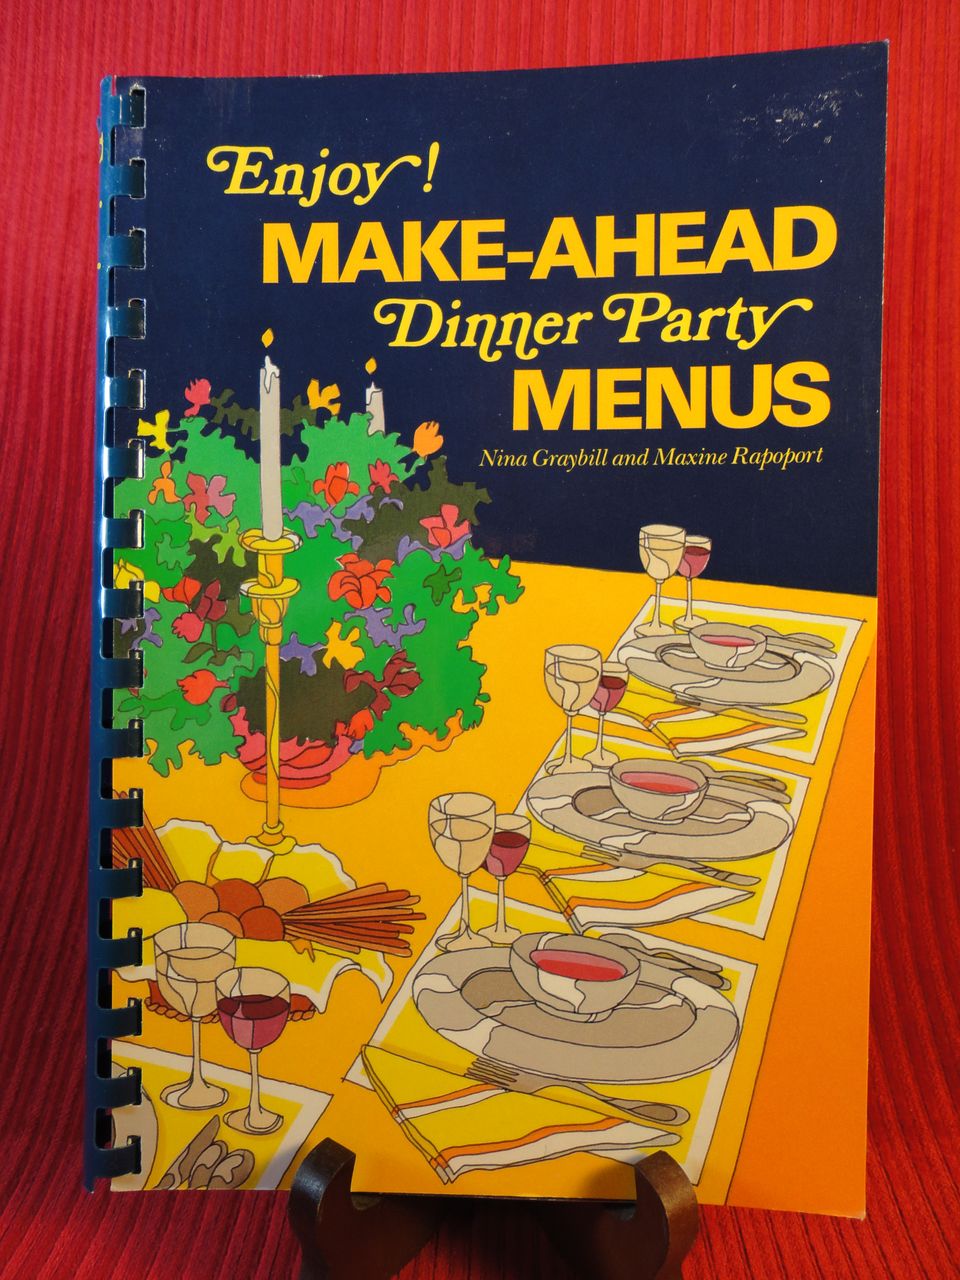 Enjoy!: Make Ahead Dinner Party Menus Nina Graybill and Maxine Rapoport